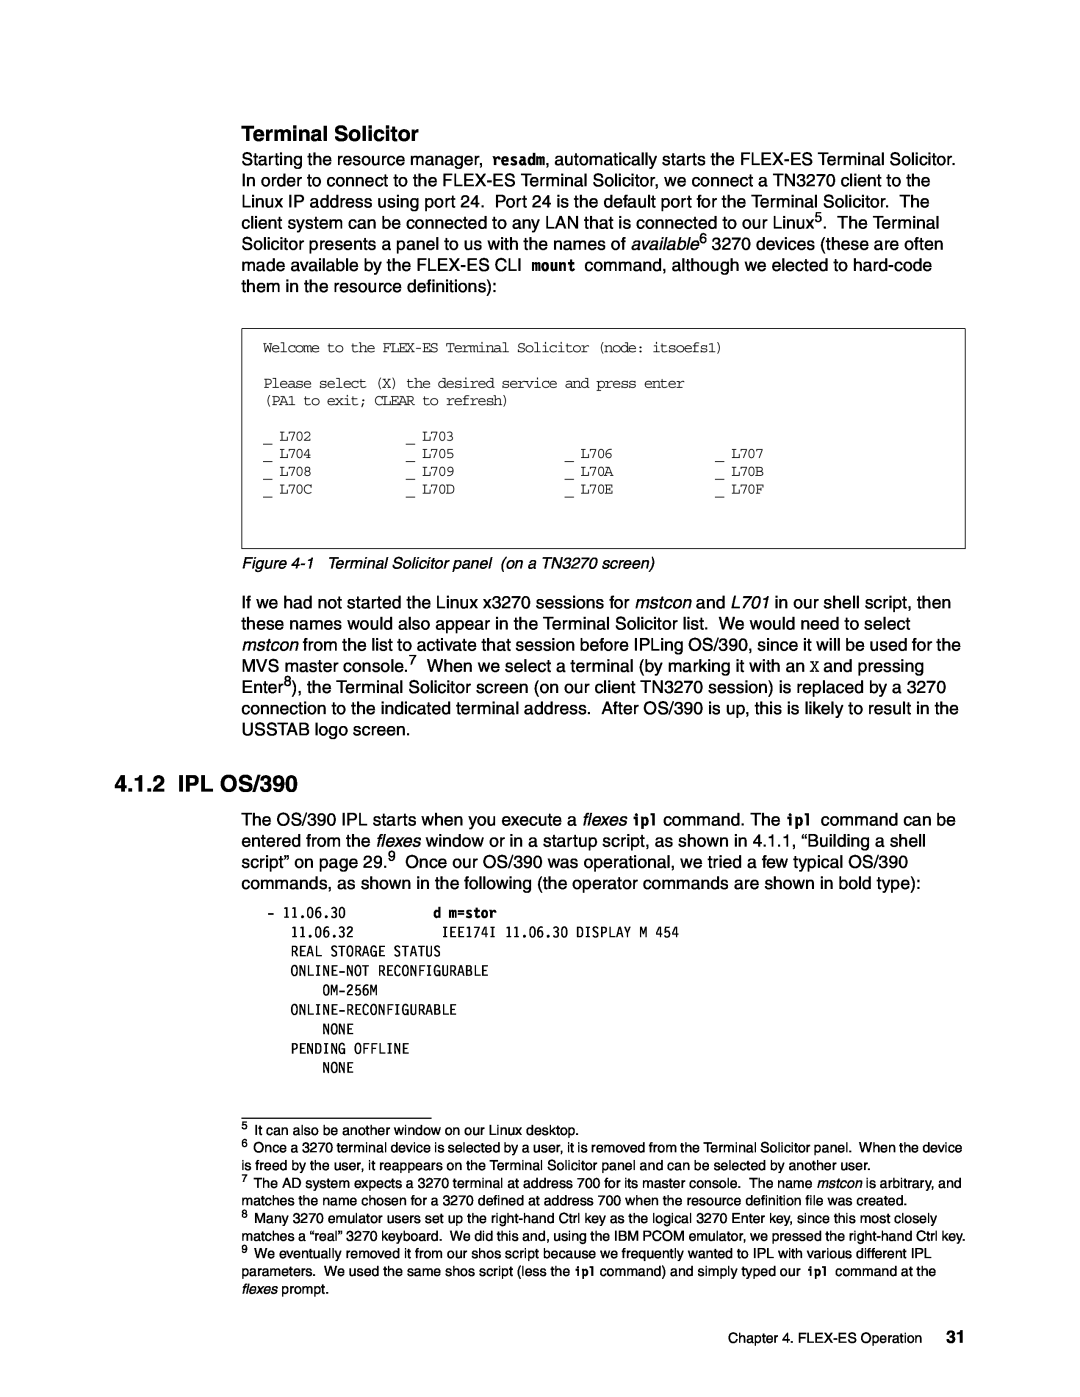 IBM s/390 manual IPL OS/390, Terminal Solicitor 